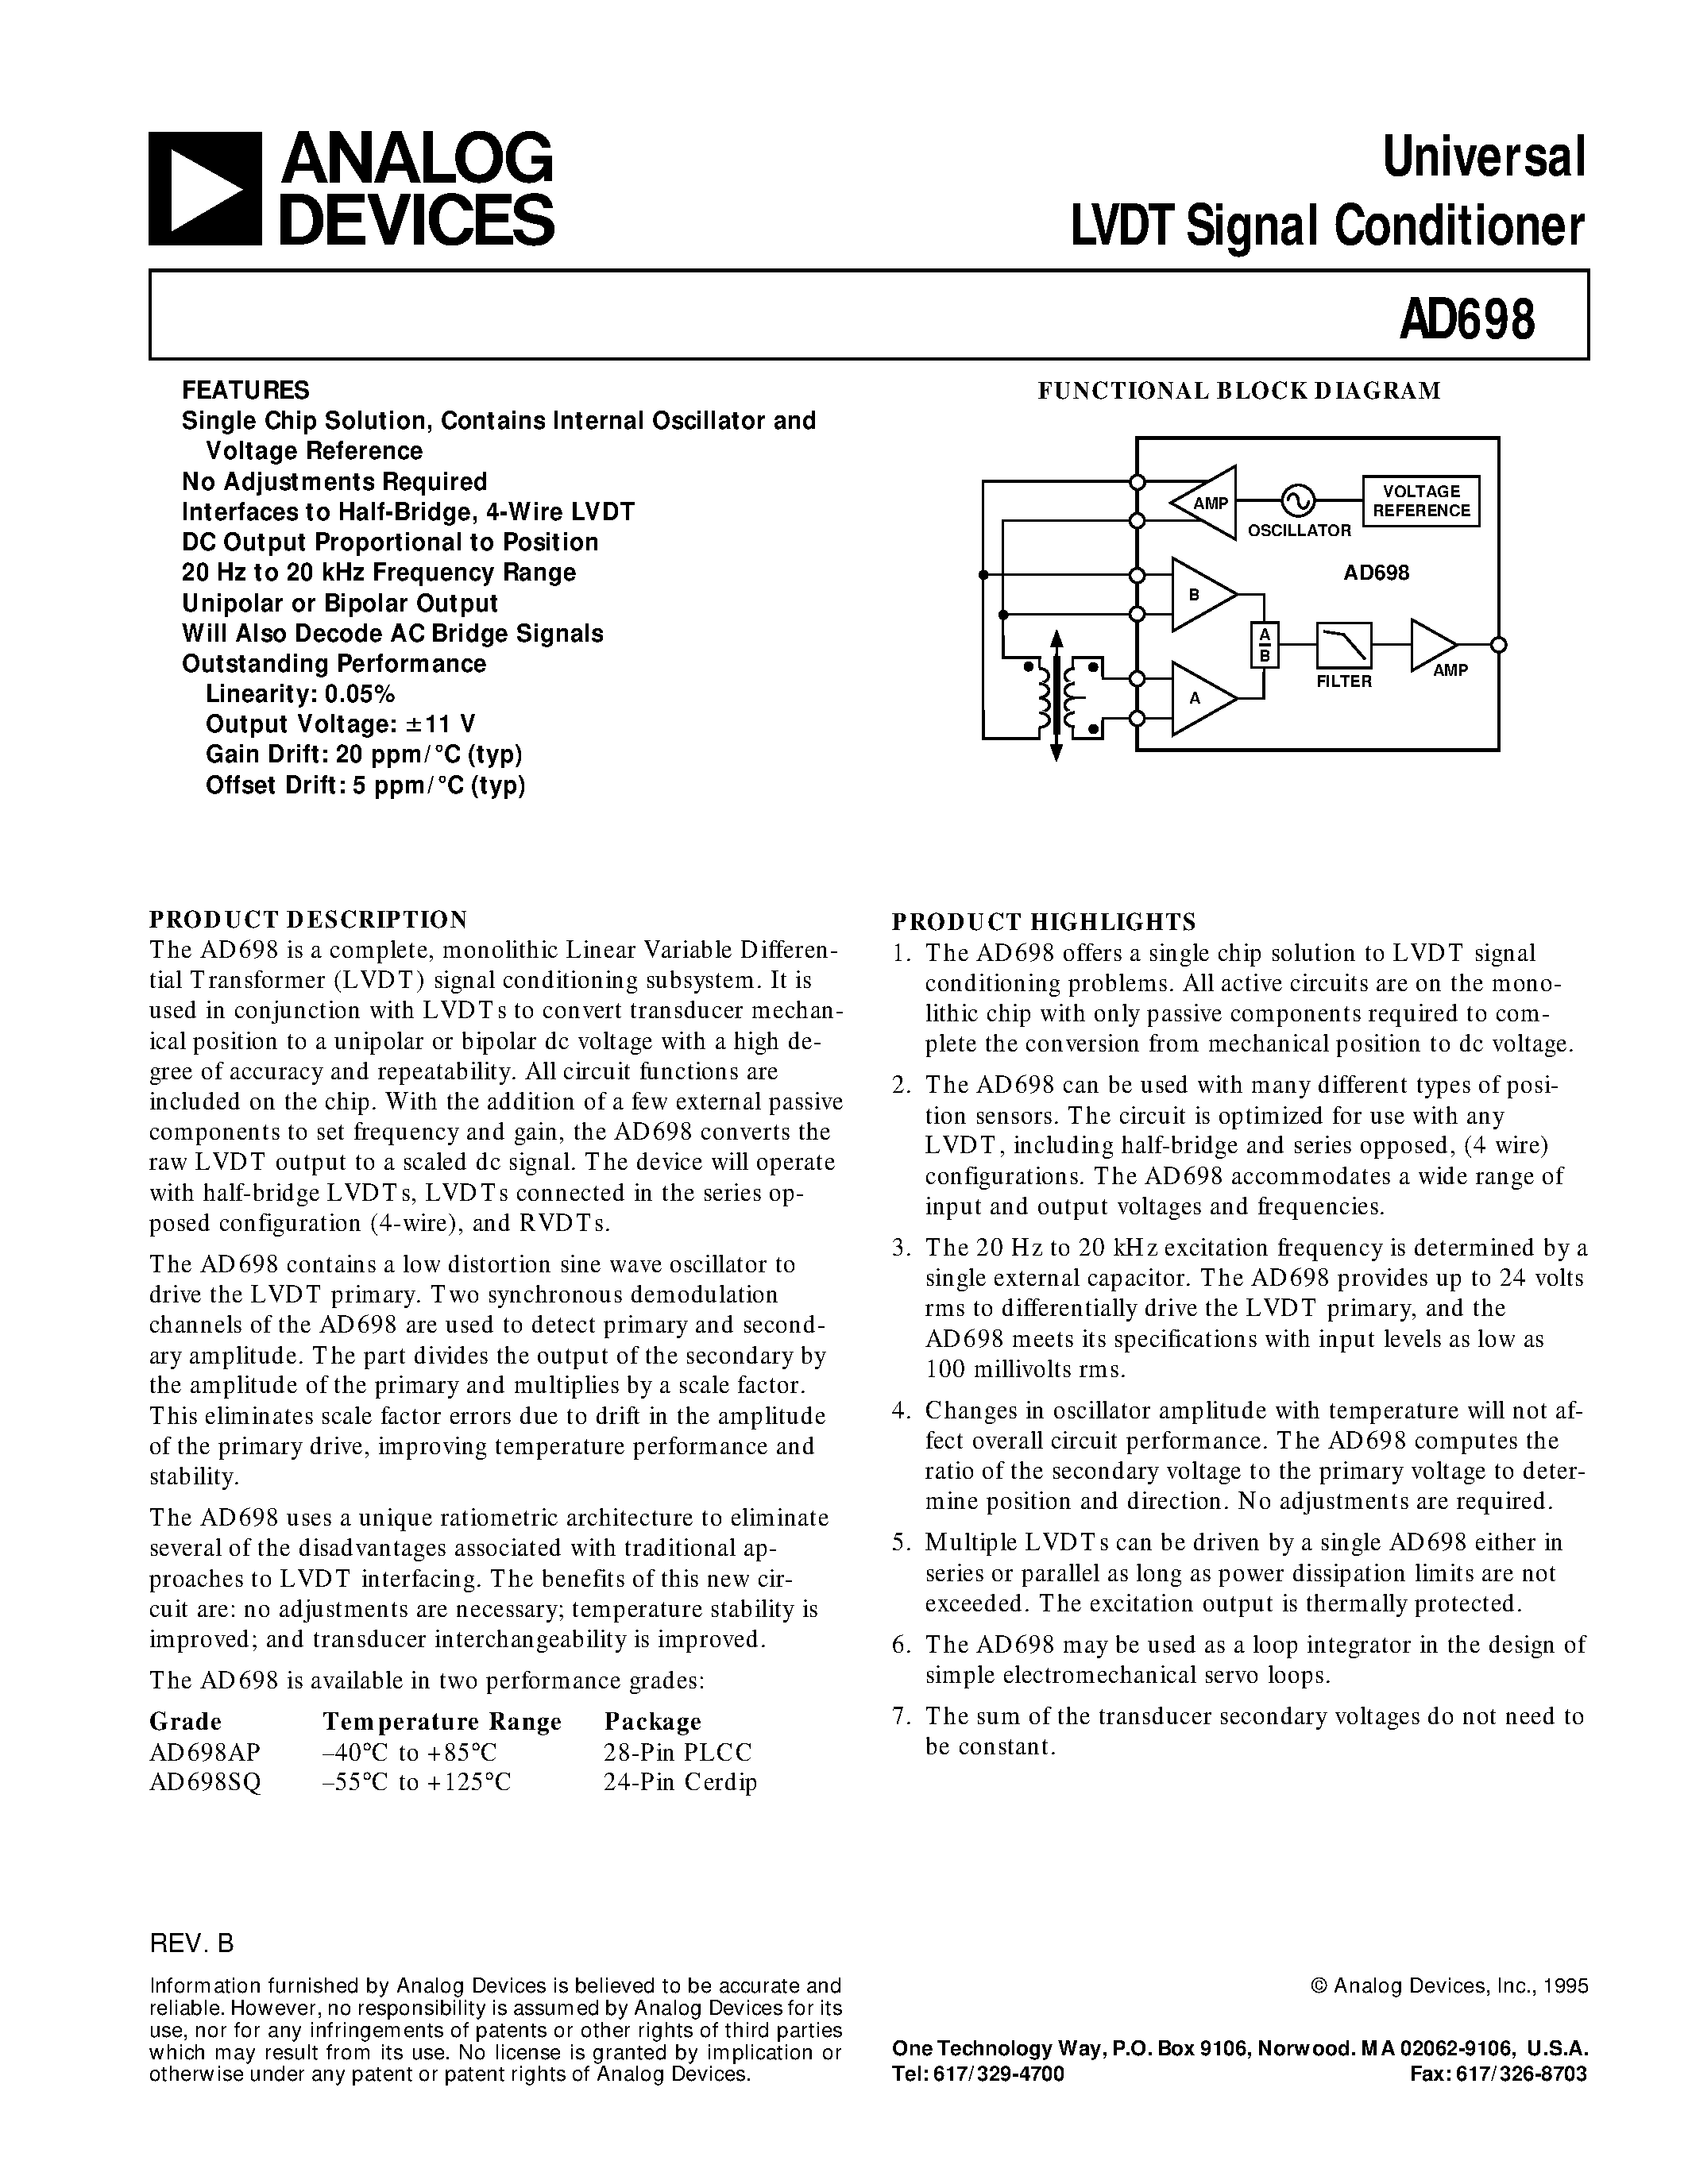 Даташит AD698 - Universal LVDT Signal Conditioner страница 1